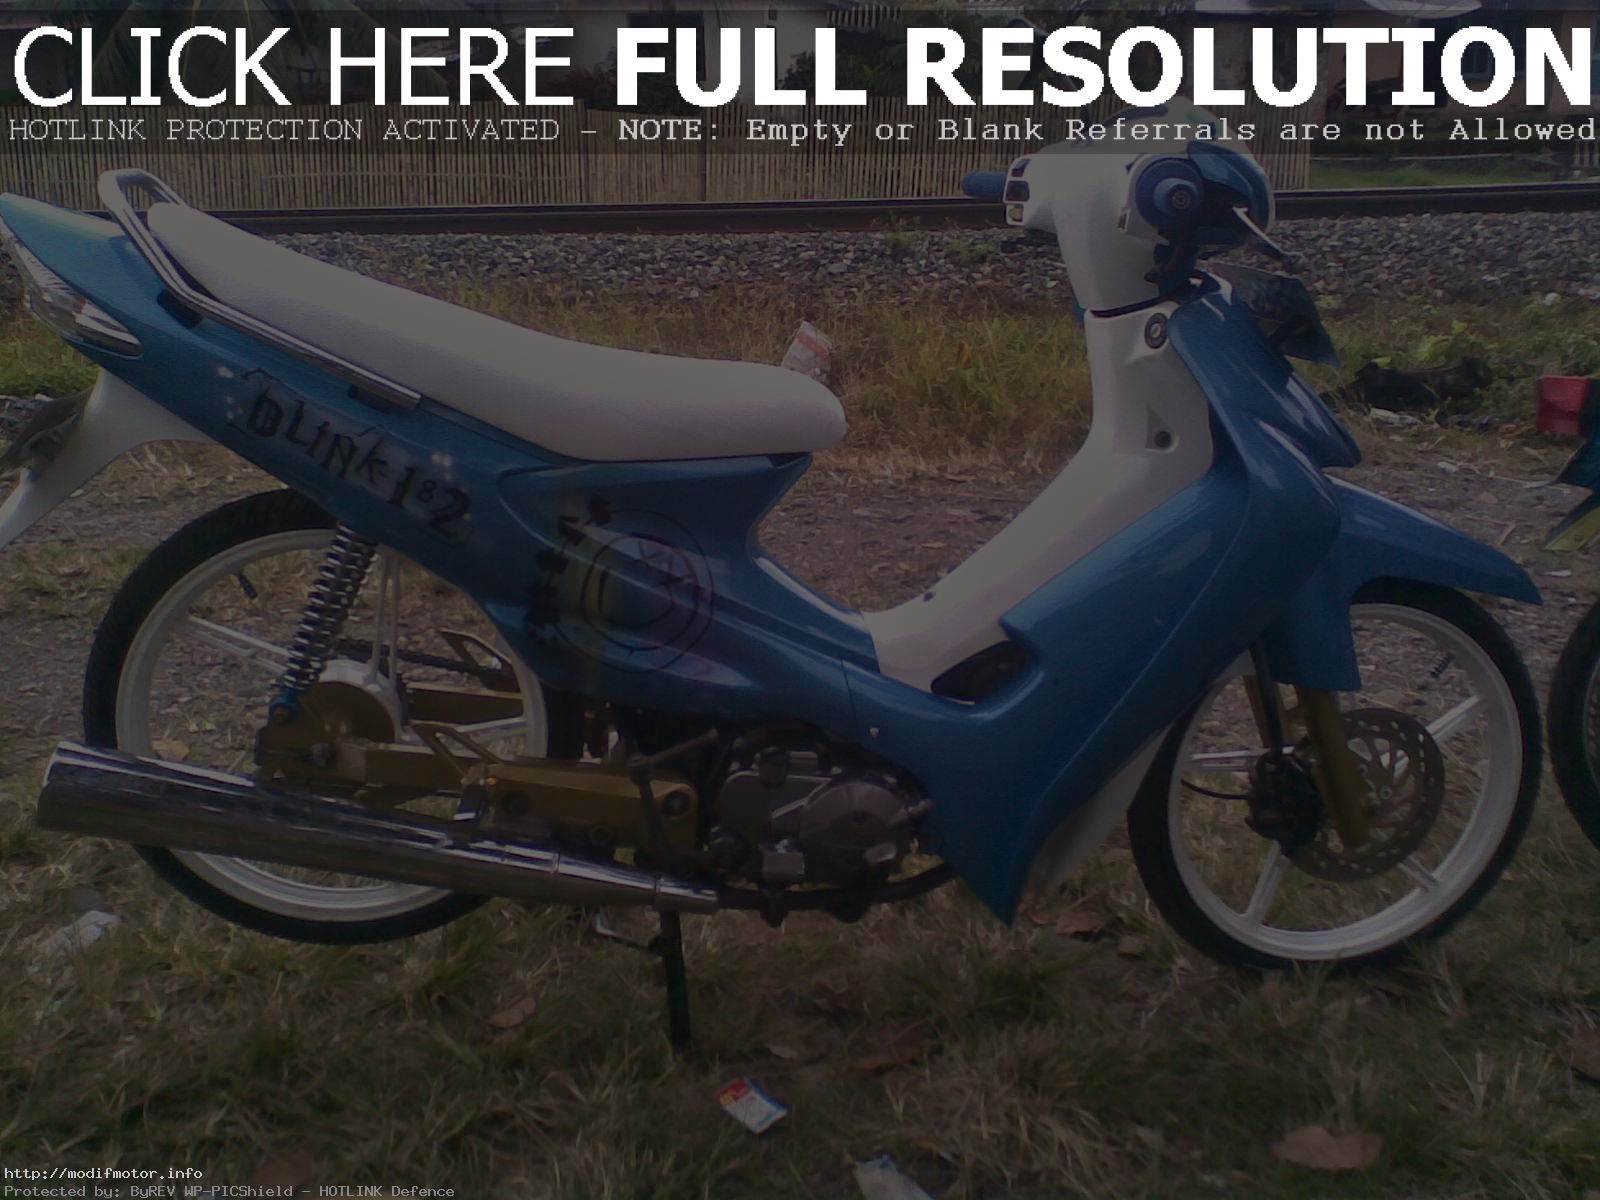 Modifikasi Motor Suzuki Smash 110 Cc Thecitycyclist